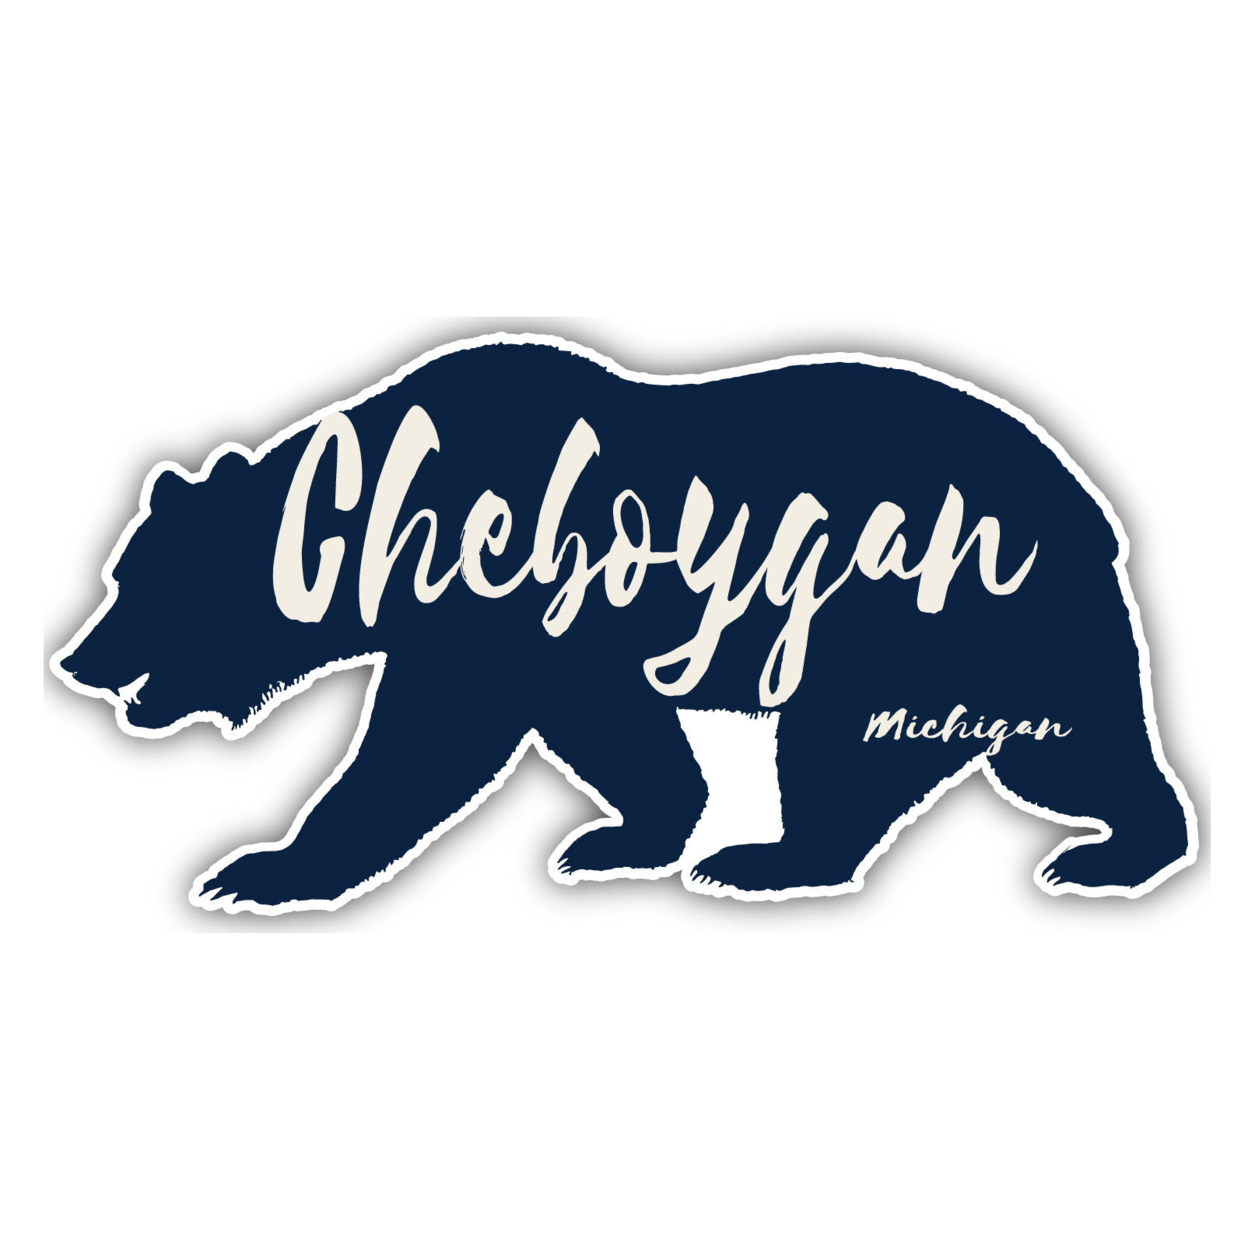 Cheboygan Michigan Souvenir Decorative Stickers (Choose Theme And Size) - 4-Pack, 12-Inch, Bear